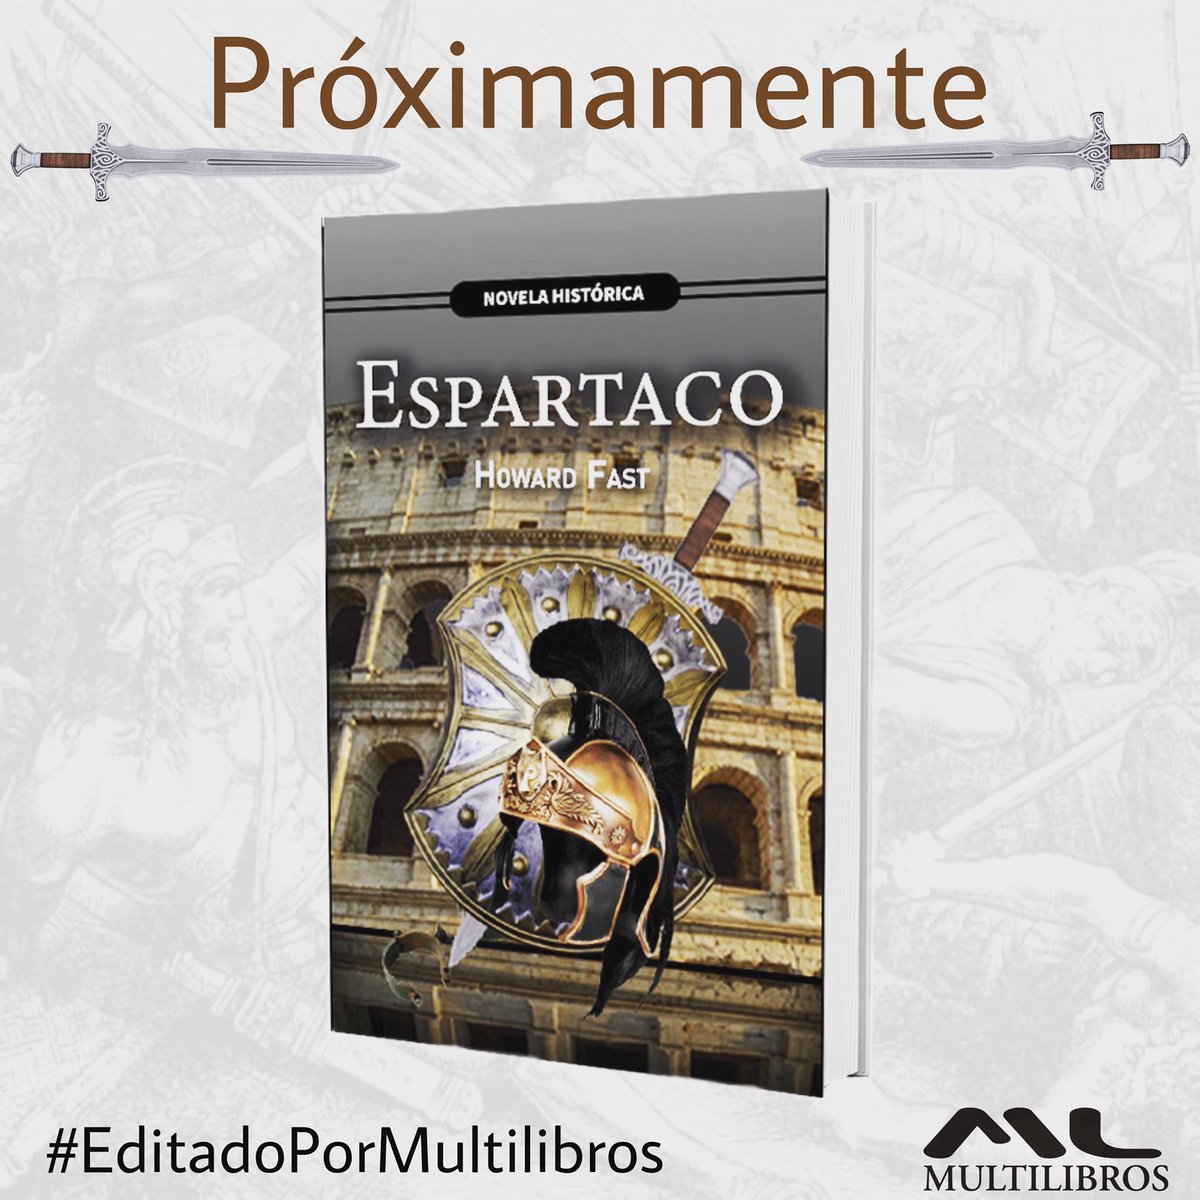 #novelahistórica #espartaco #gladiador #historia #próximamente #libroshistoricos #editadopormultilibros #multilibros #librosrecomendados